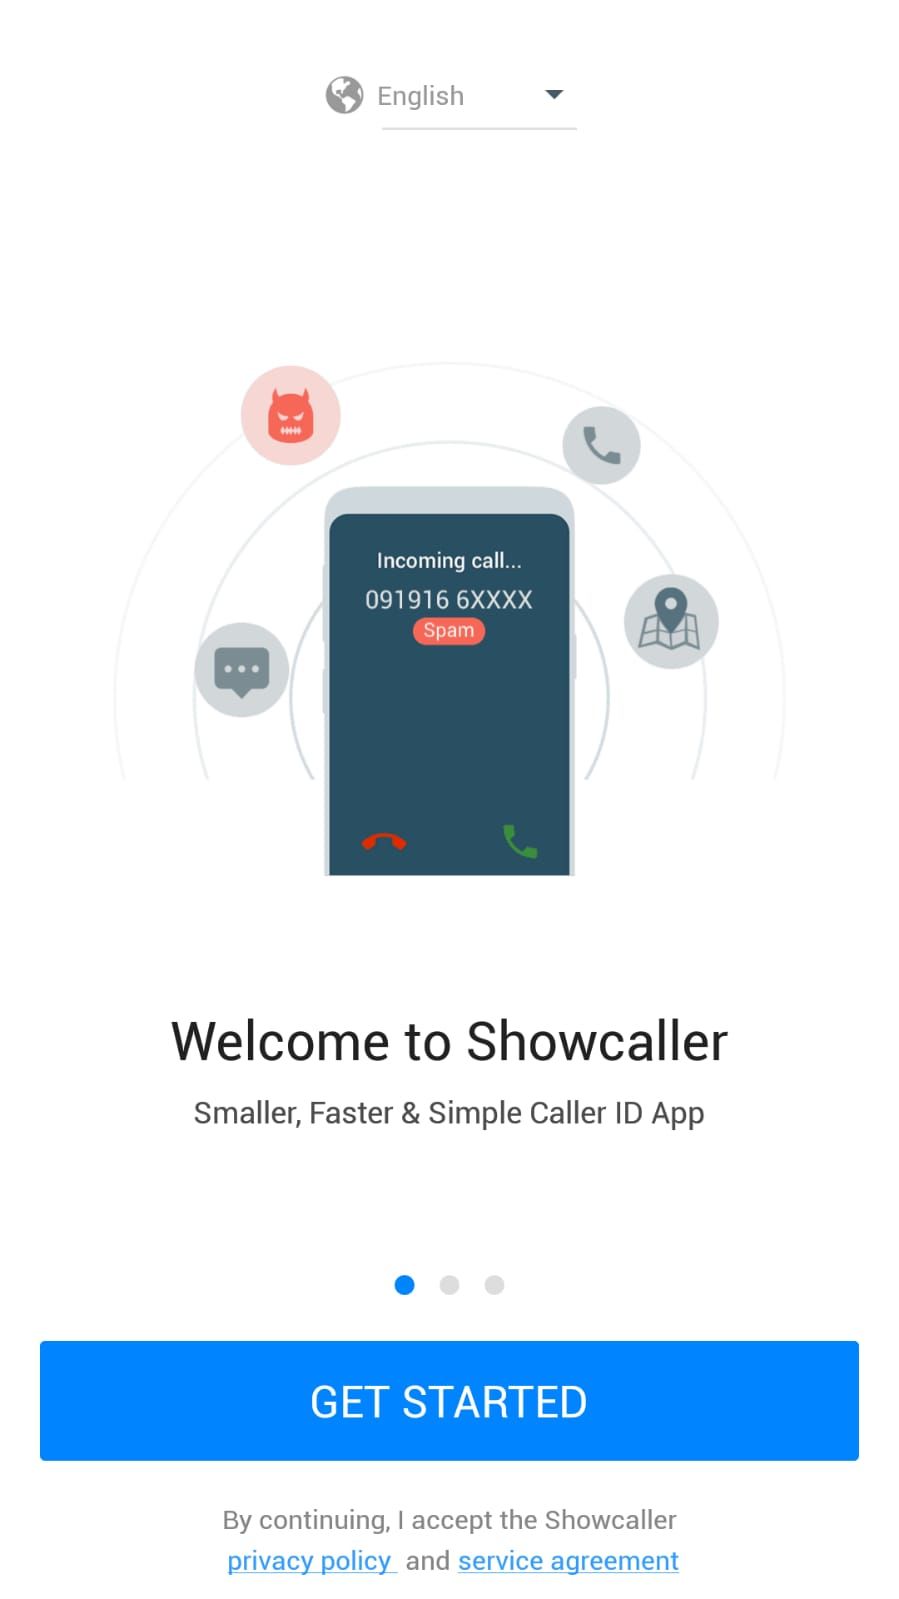 Showcaller - Get Started Page